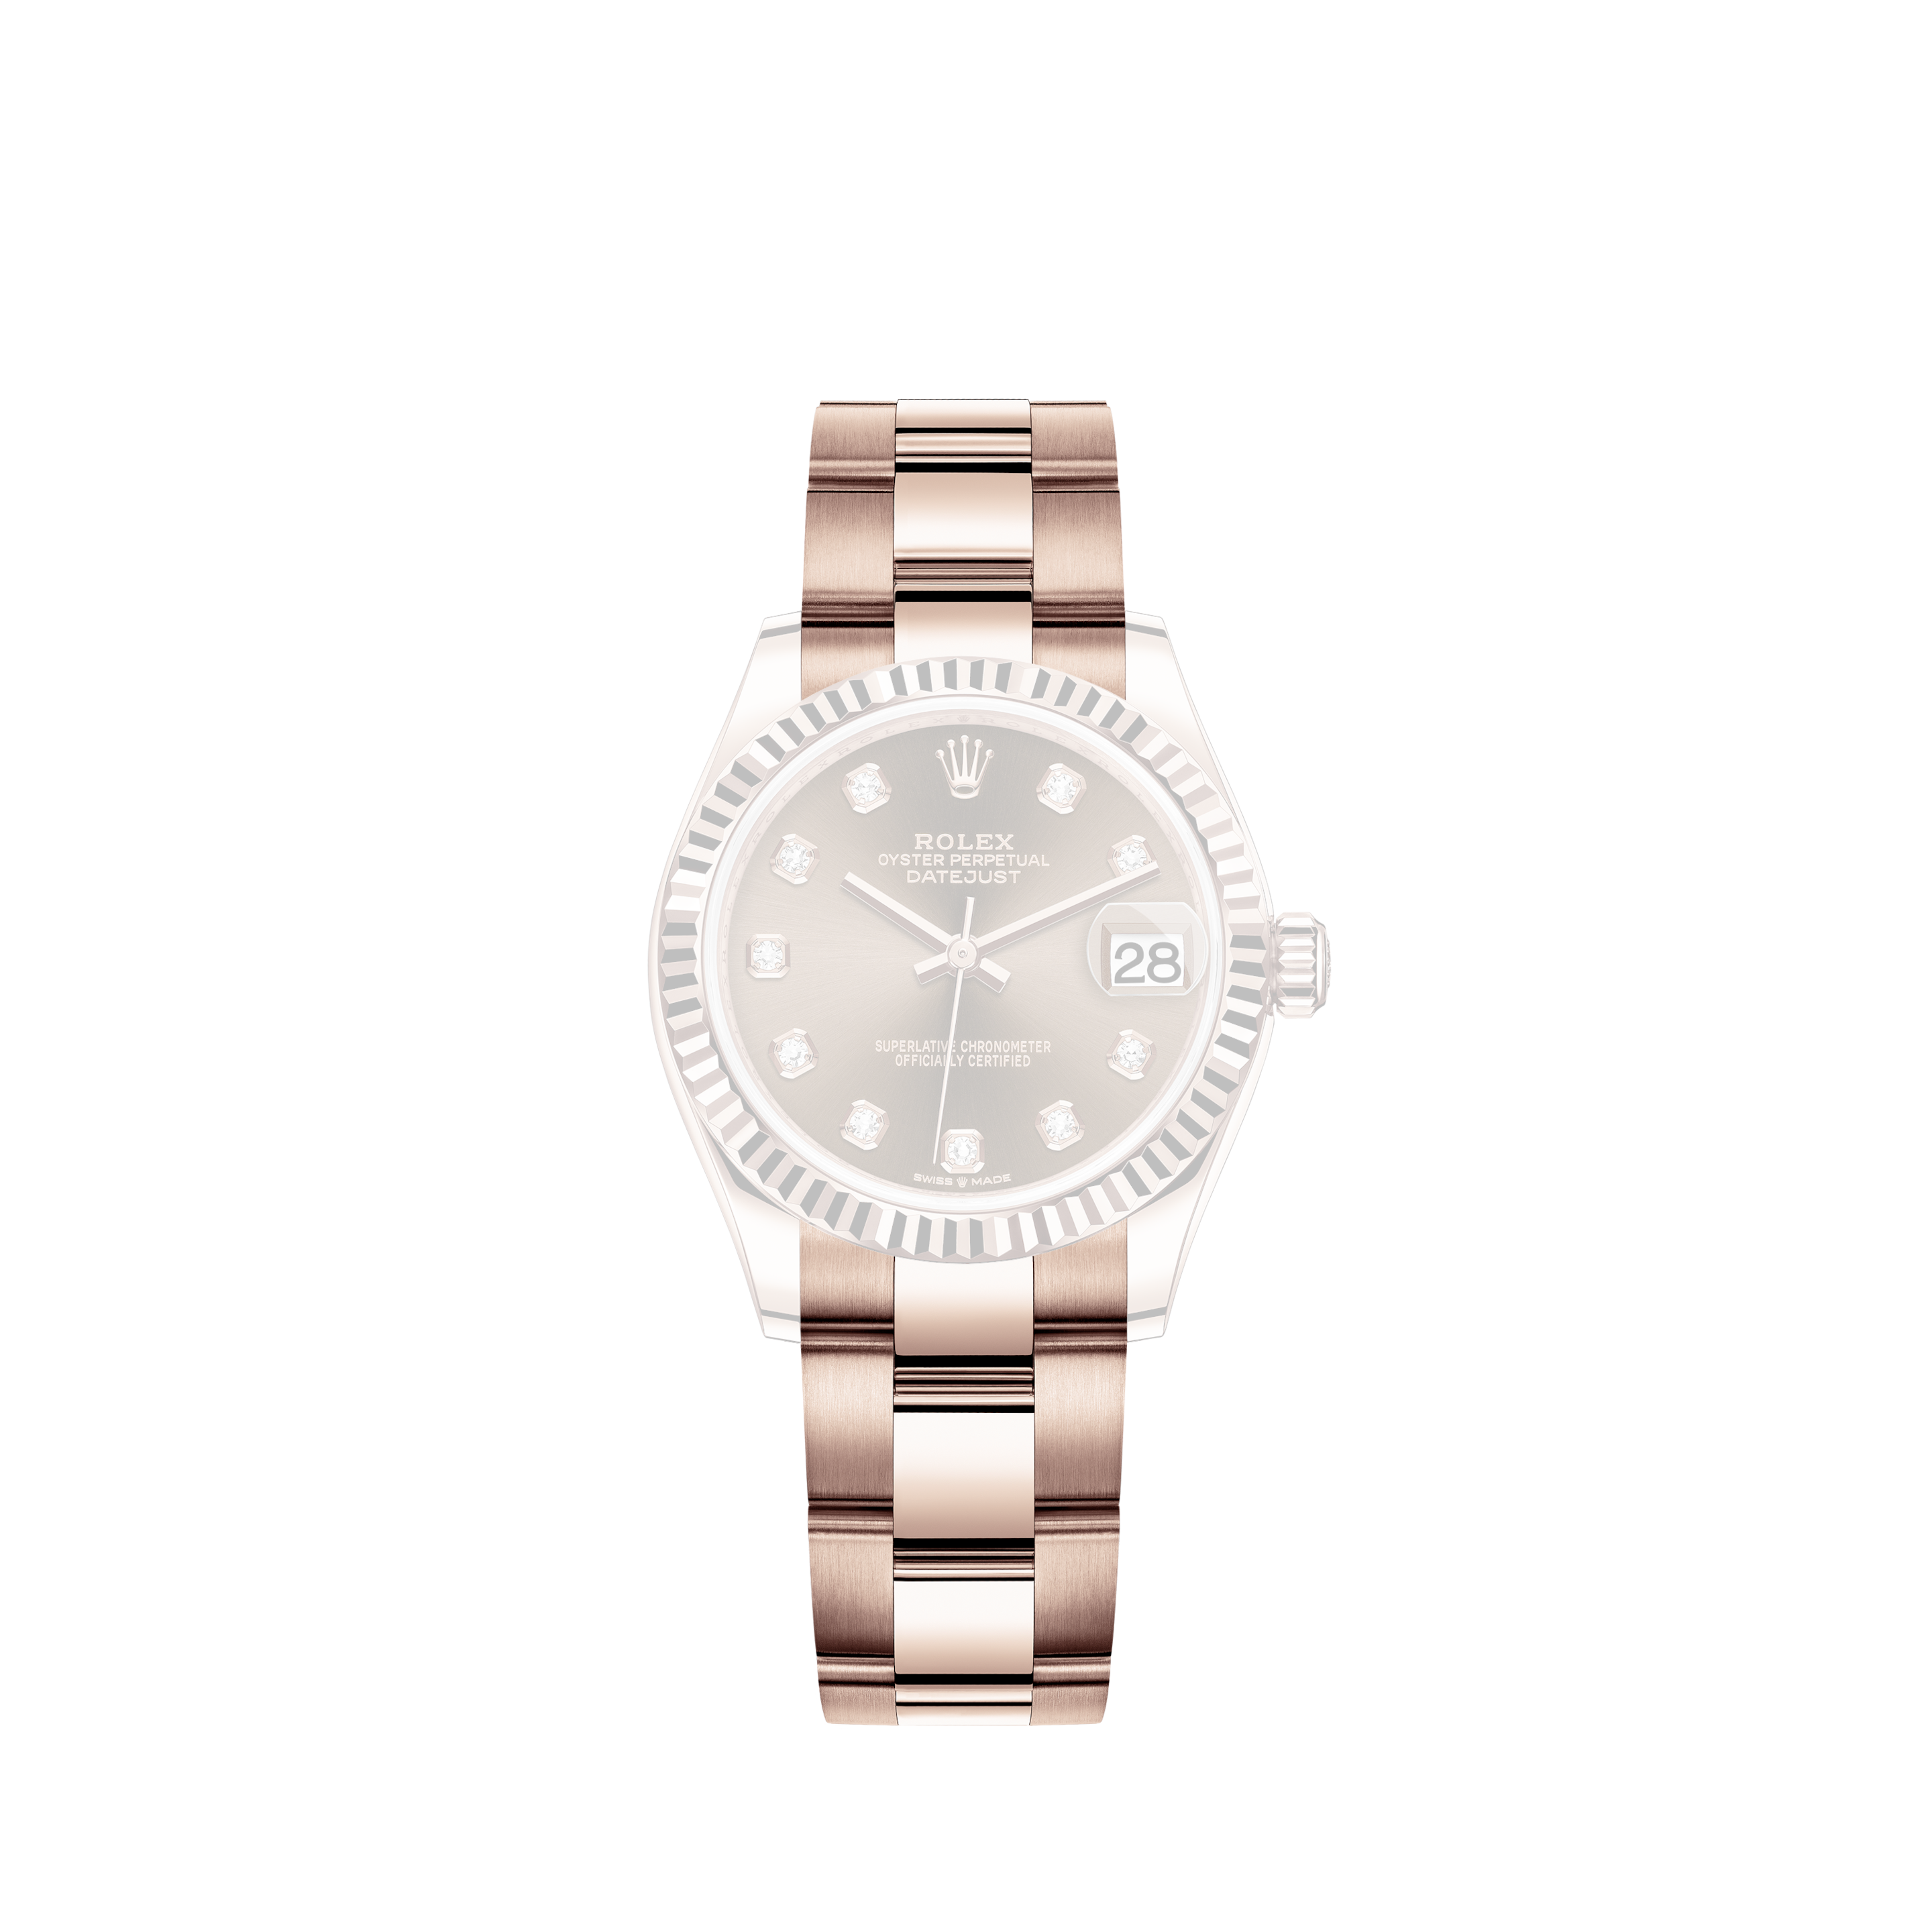 Rolex Ladies President 18K Yellow Gold Diamond Watch 79178